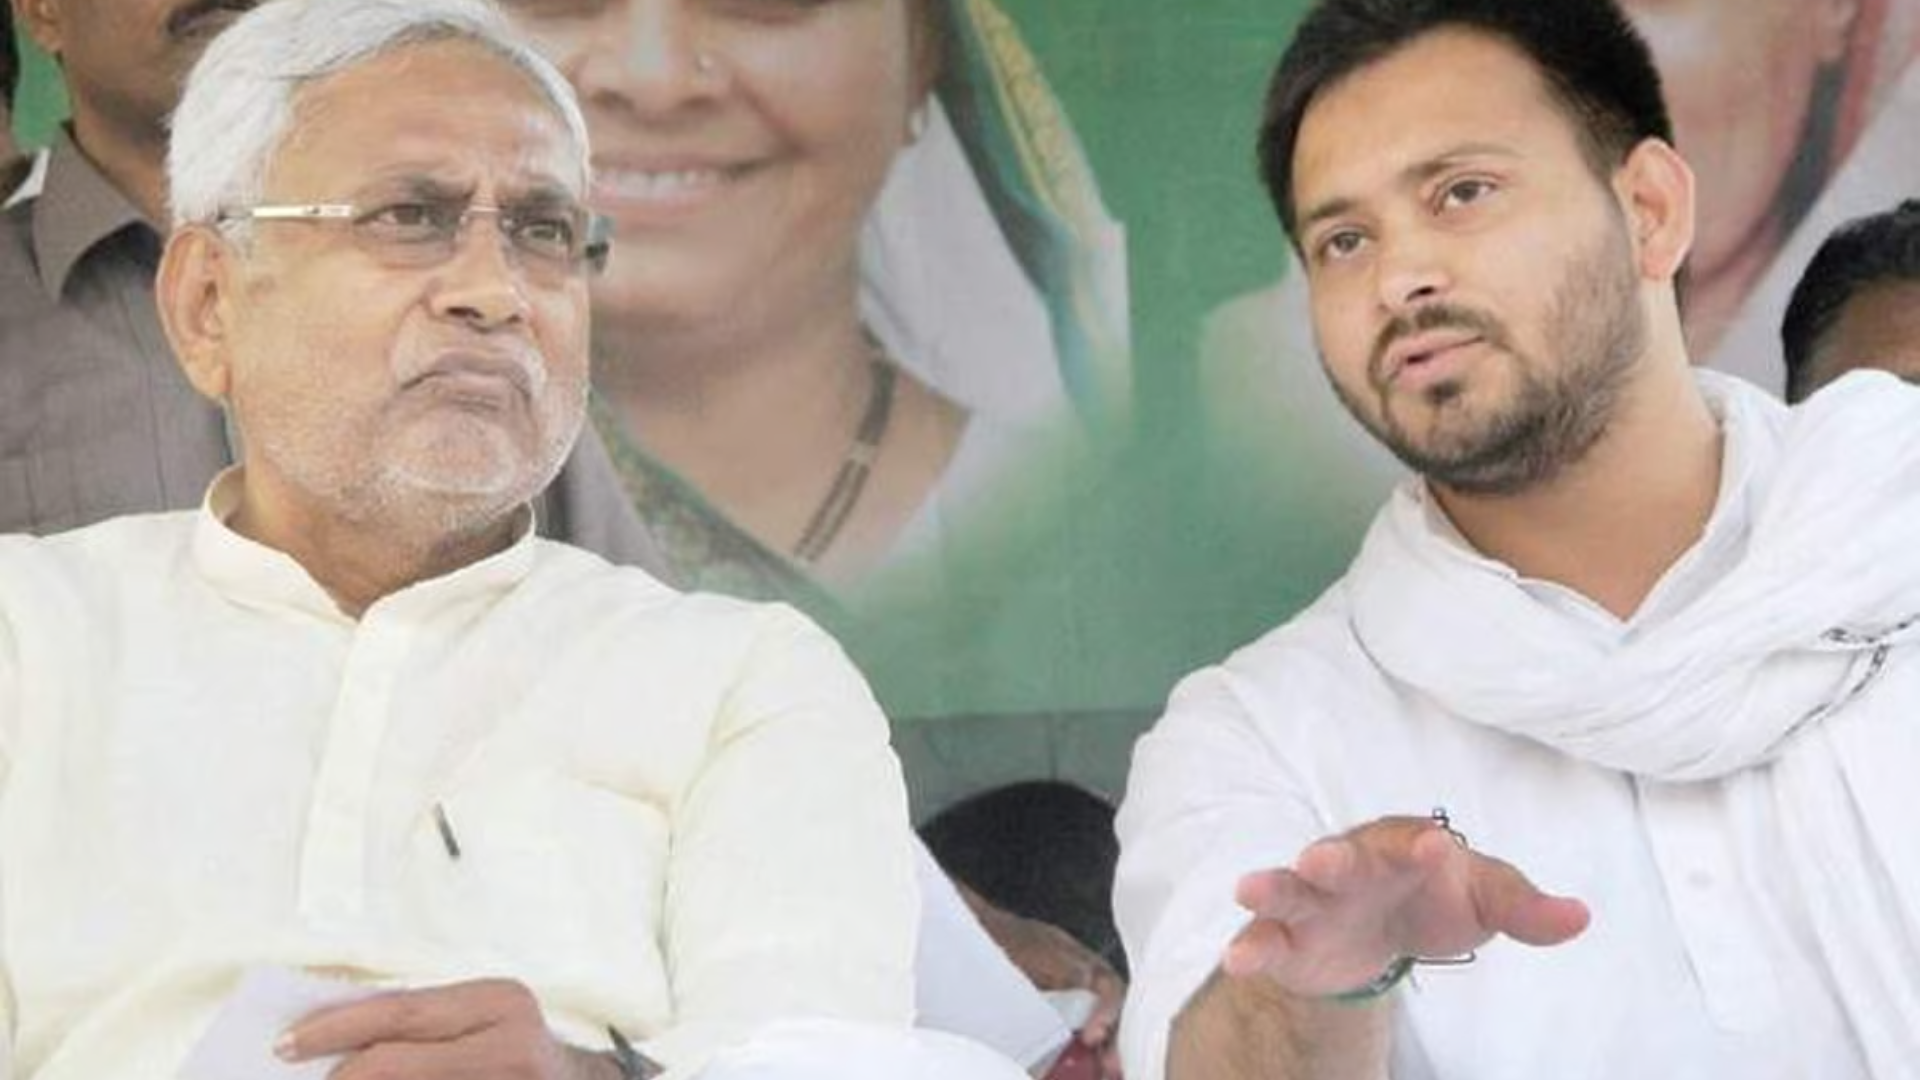 Bihar: Tejashwi Yadav Deputy CM skips Governor’s function attended by CM Nitish Kumar